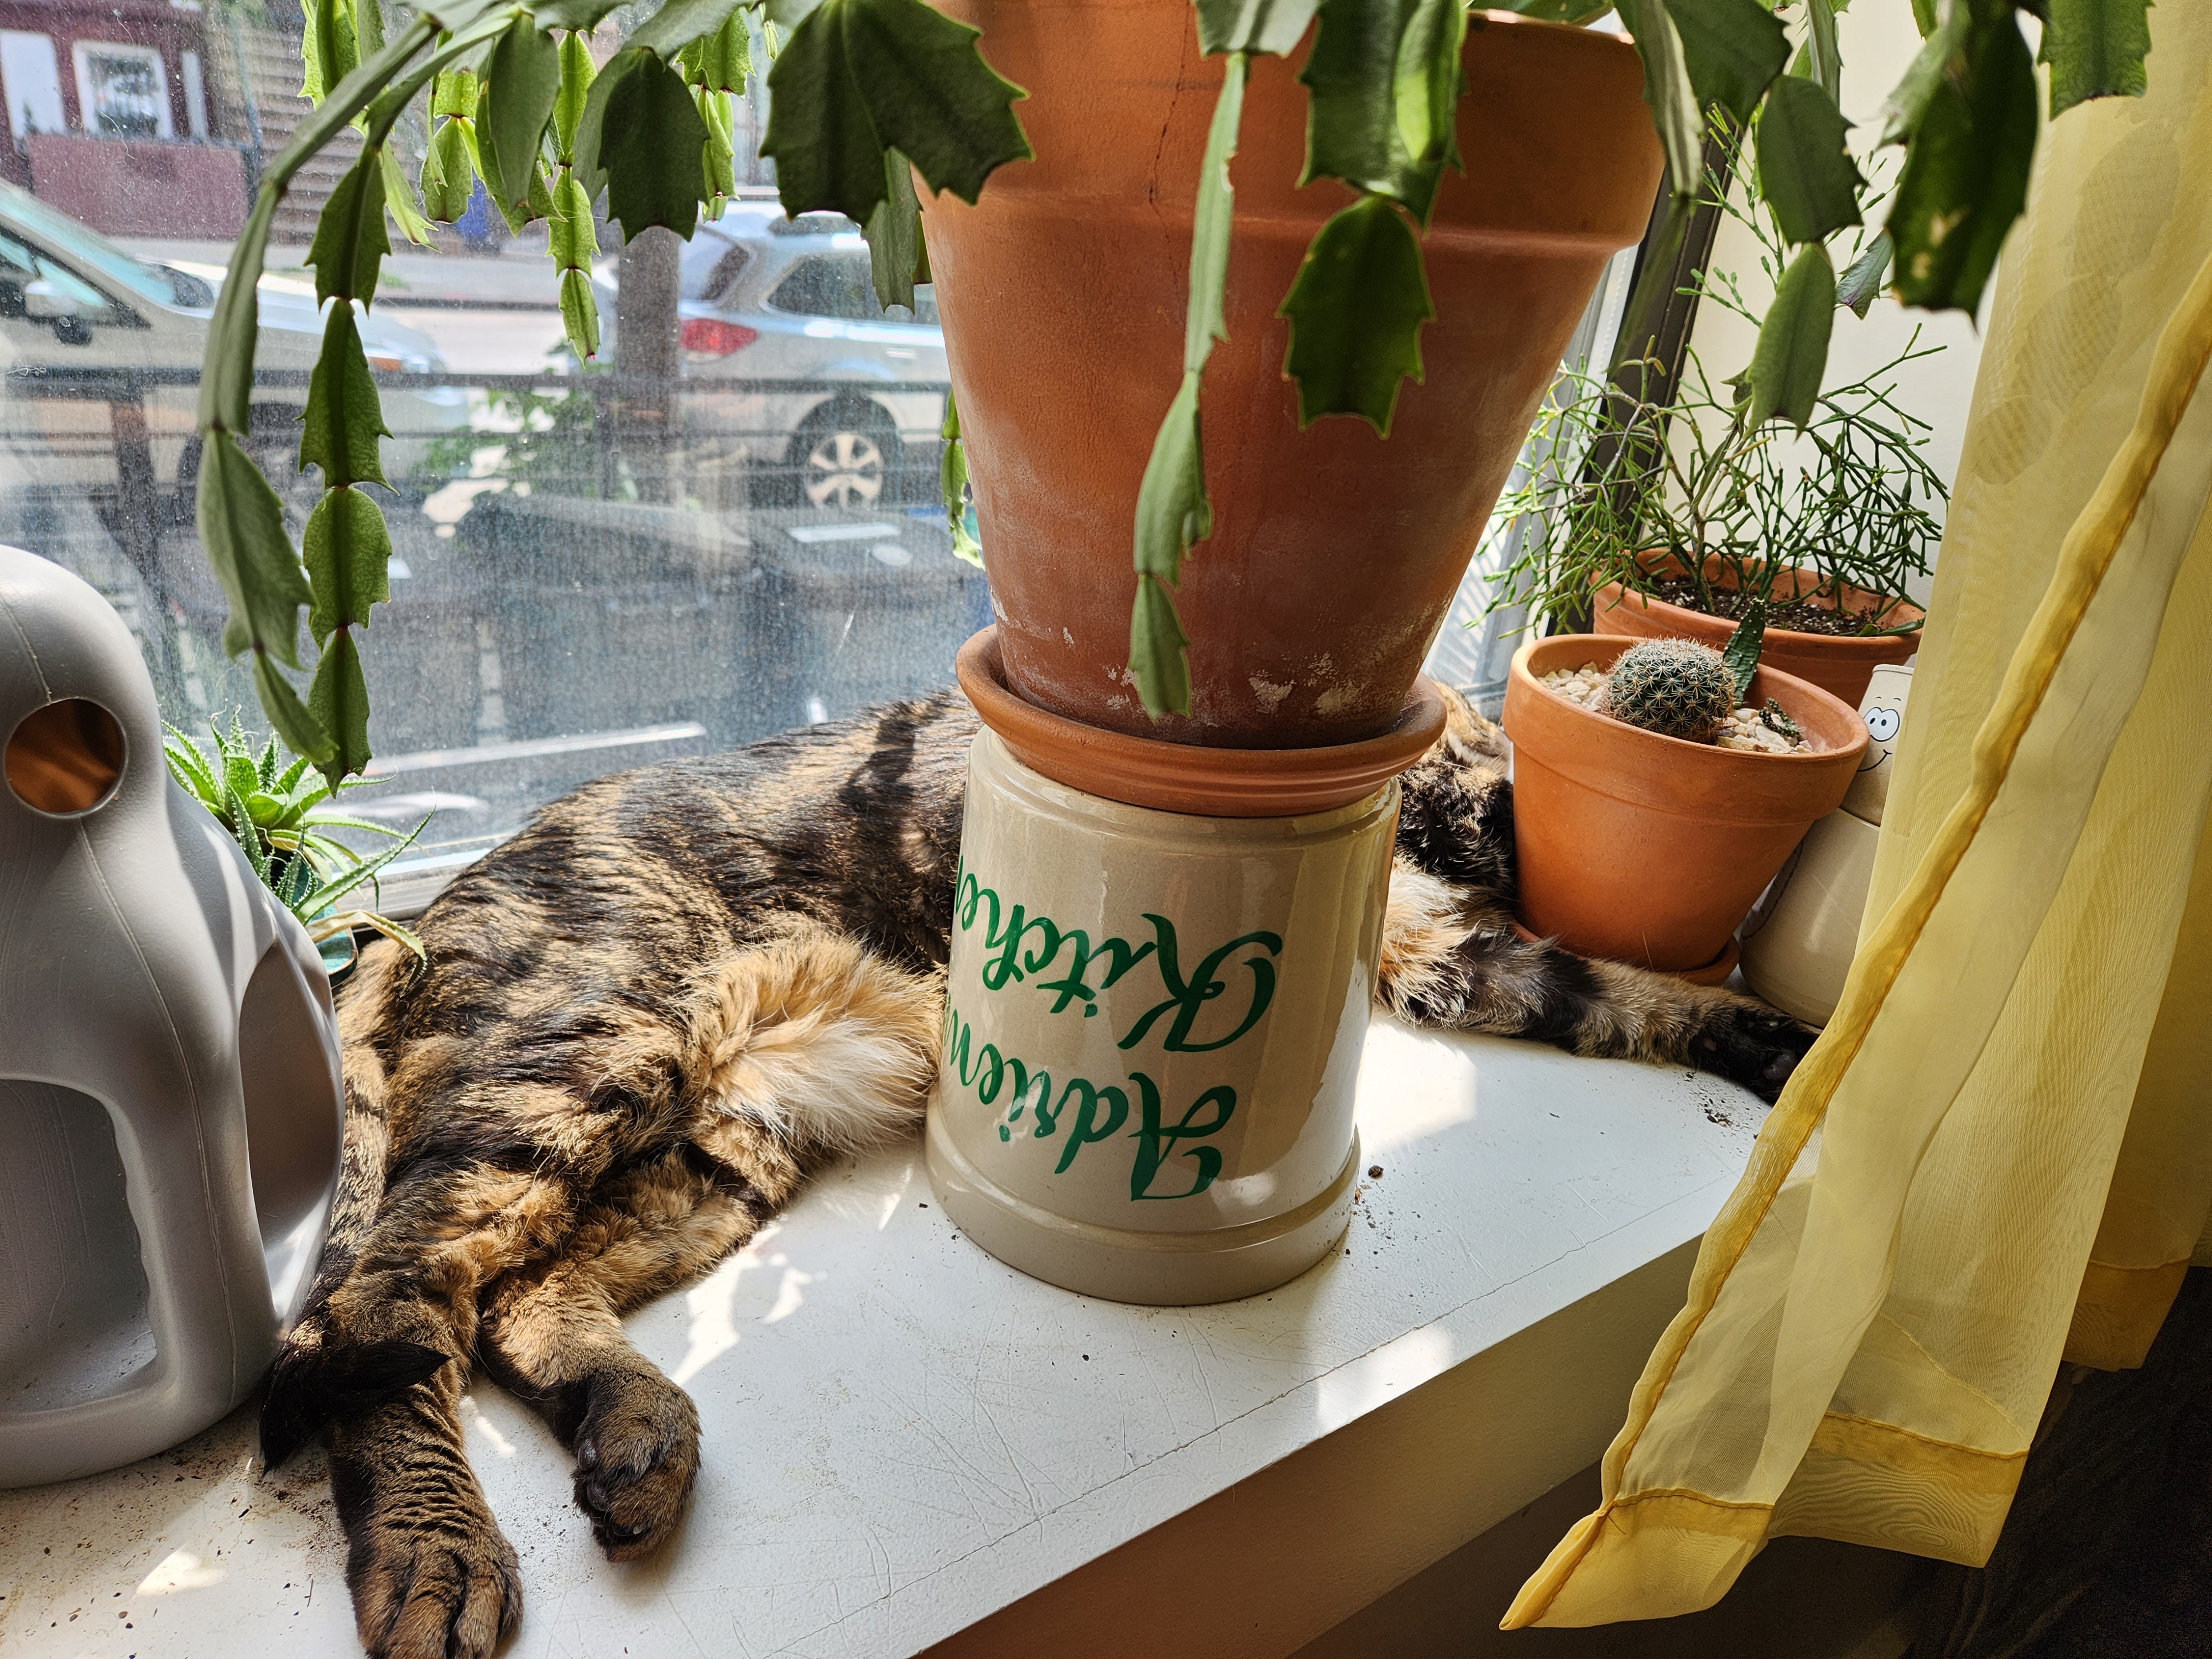 John Denver, a dark brown tabby cat, lounges on a windowsill among plants